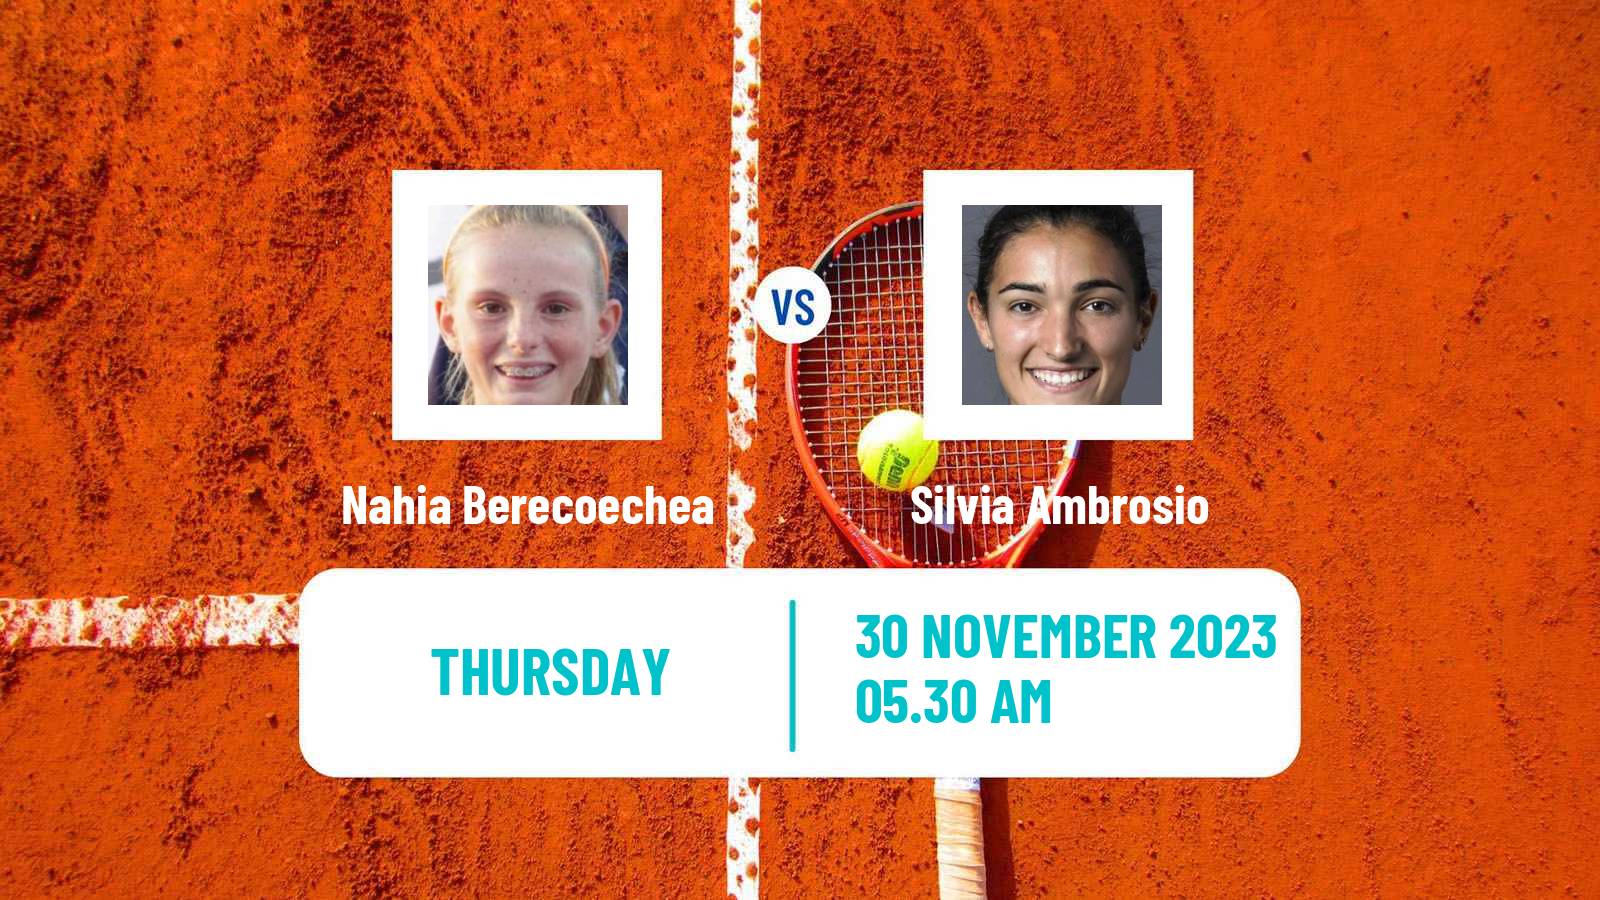 Tennis ITF W25 Limassol 2 Women Nahia Berecoechea - Silvia Ambrosio